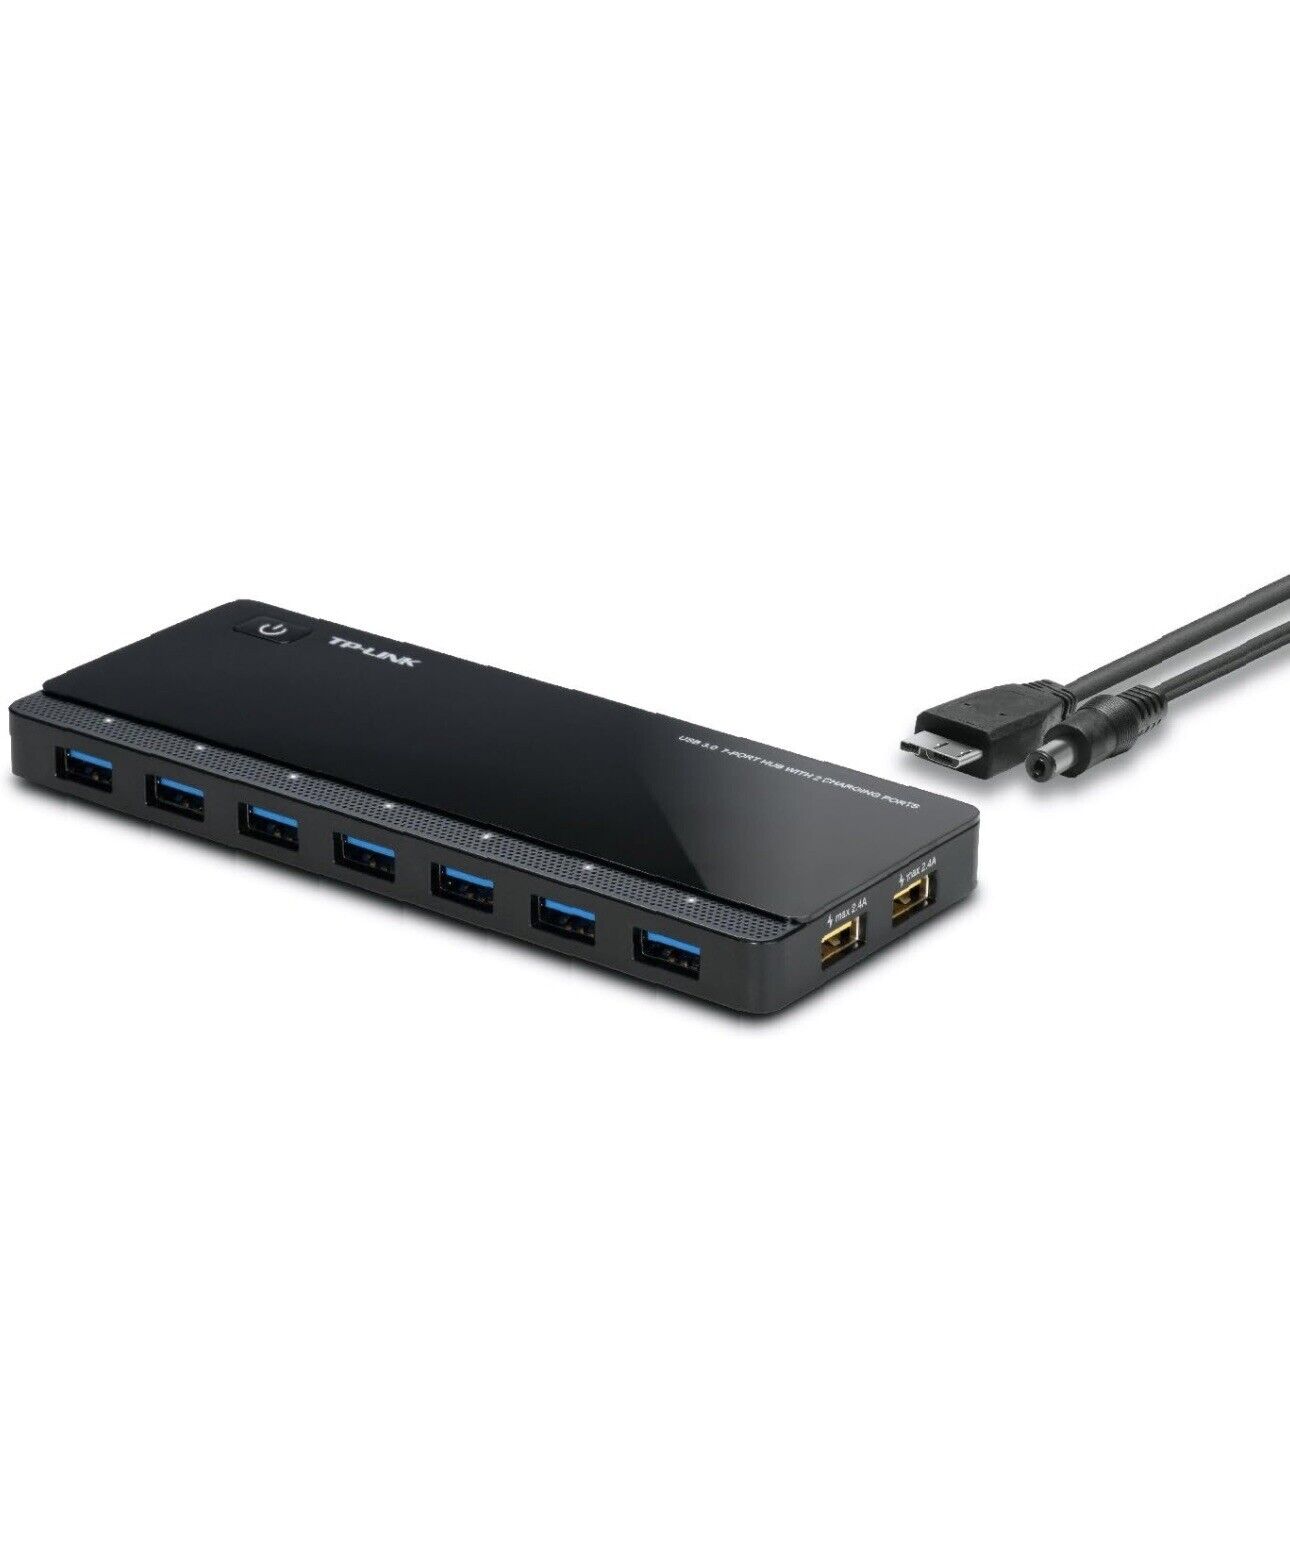 TP-LINK UH720 USB 3.0 7 Port Hub With 2 Charging Ports